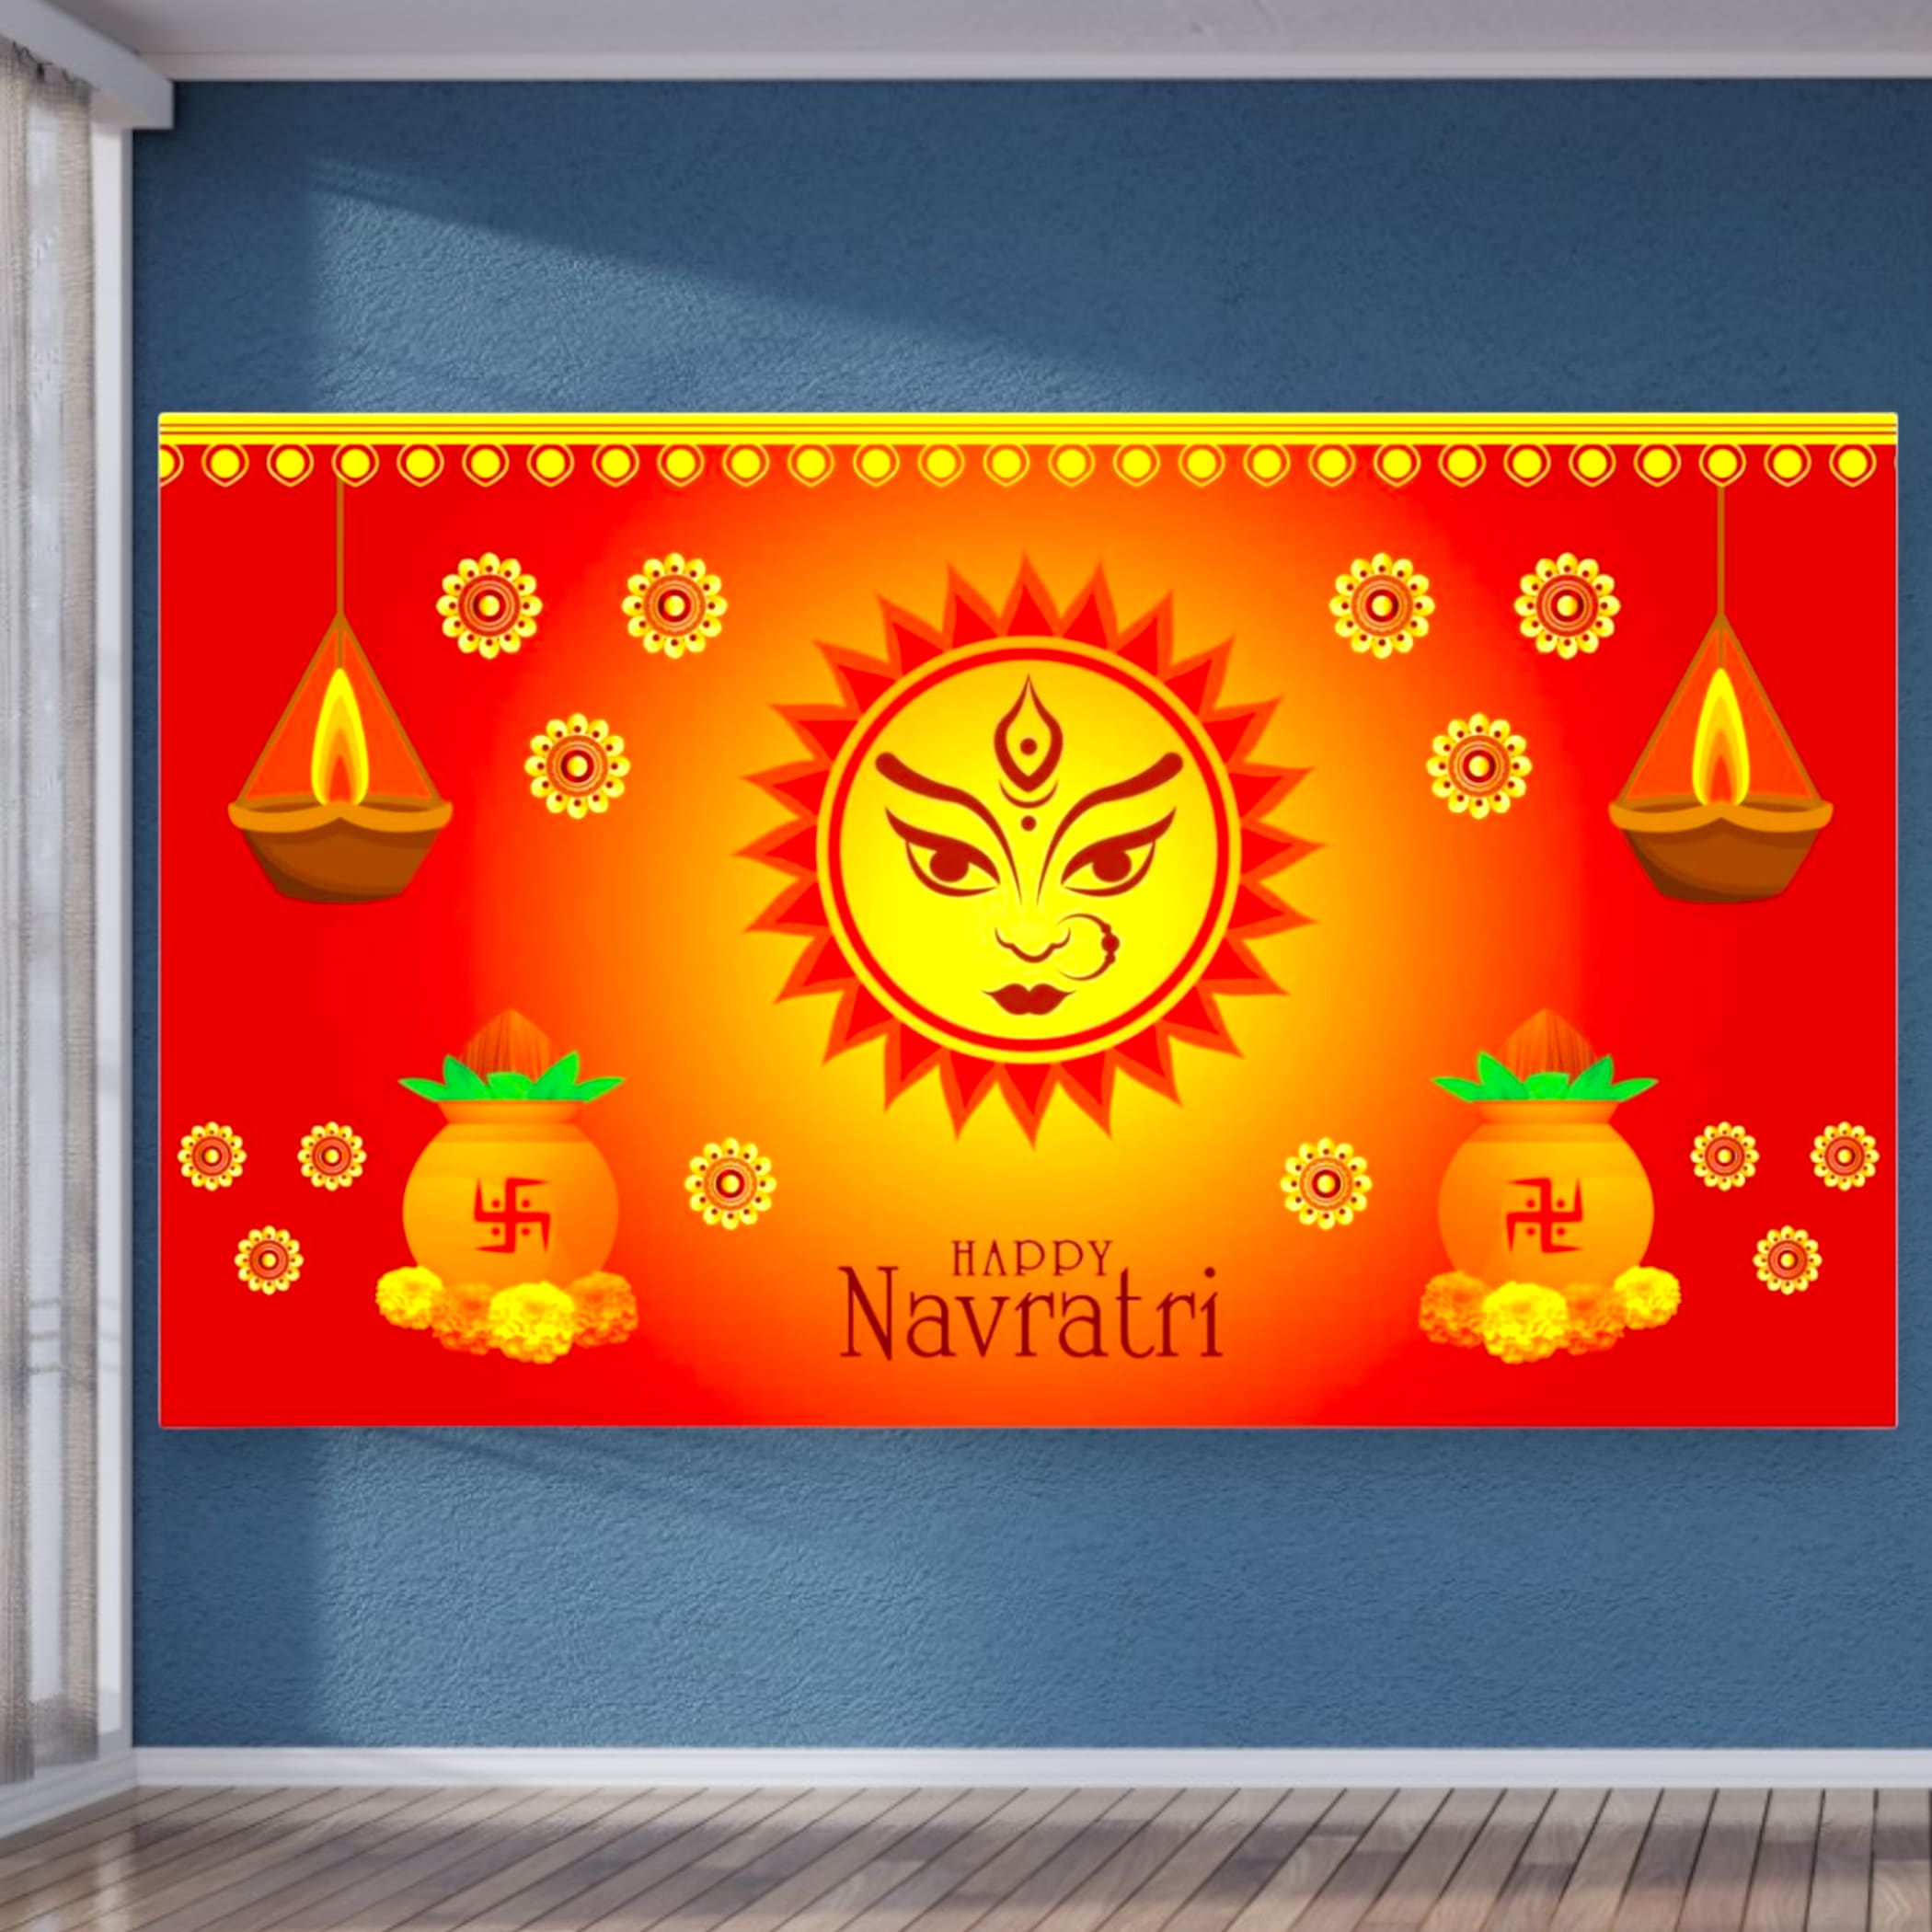 Happy Navratri Banner Decor Backdrop Indian Wall Hindu